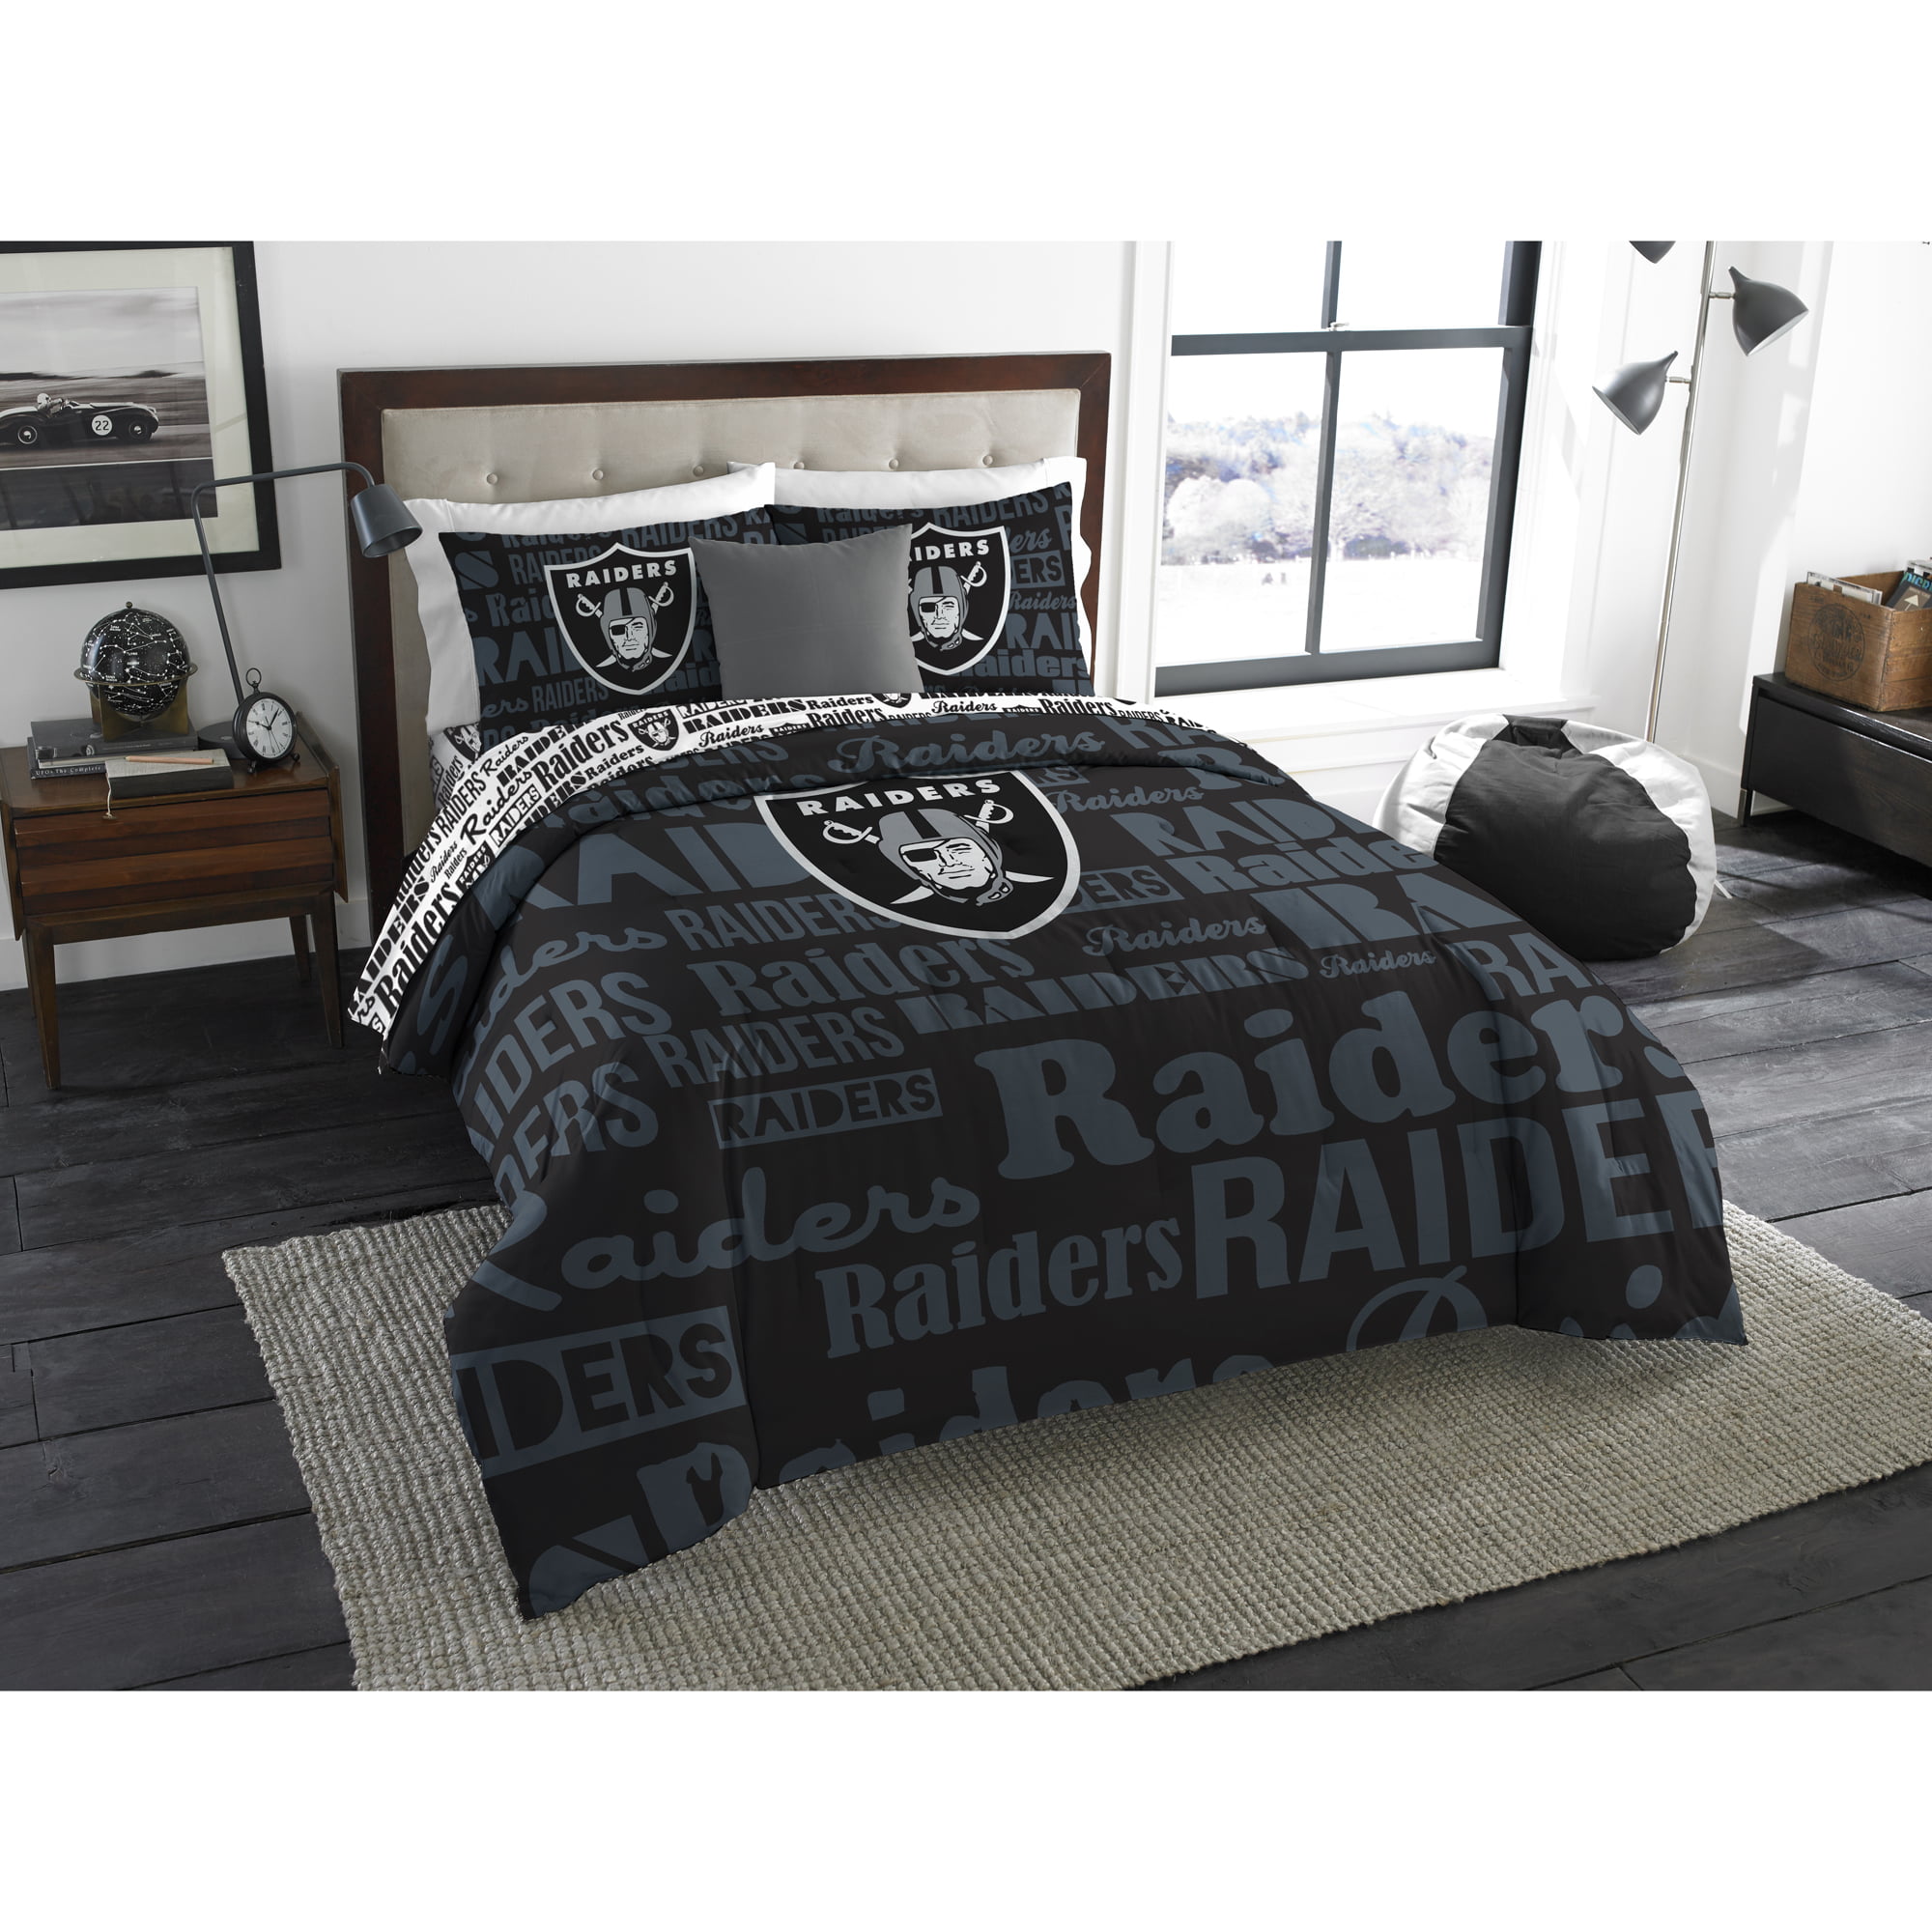 Las Vegas Raiders NFL Licensed Status Bed In A Bag Comforter & Sheet Set  - On Sale - Bed Bath & Beyond - 34843029